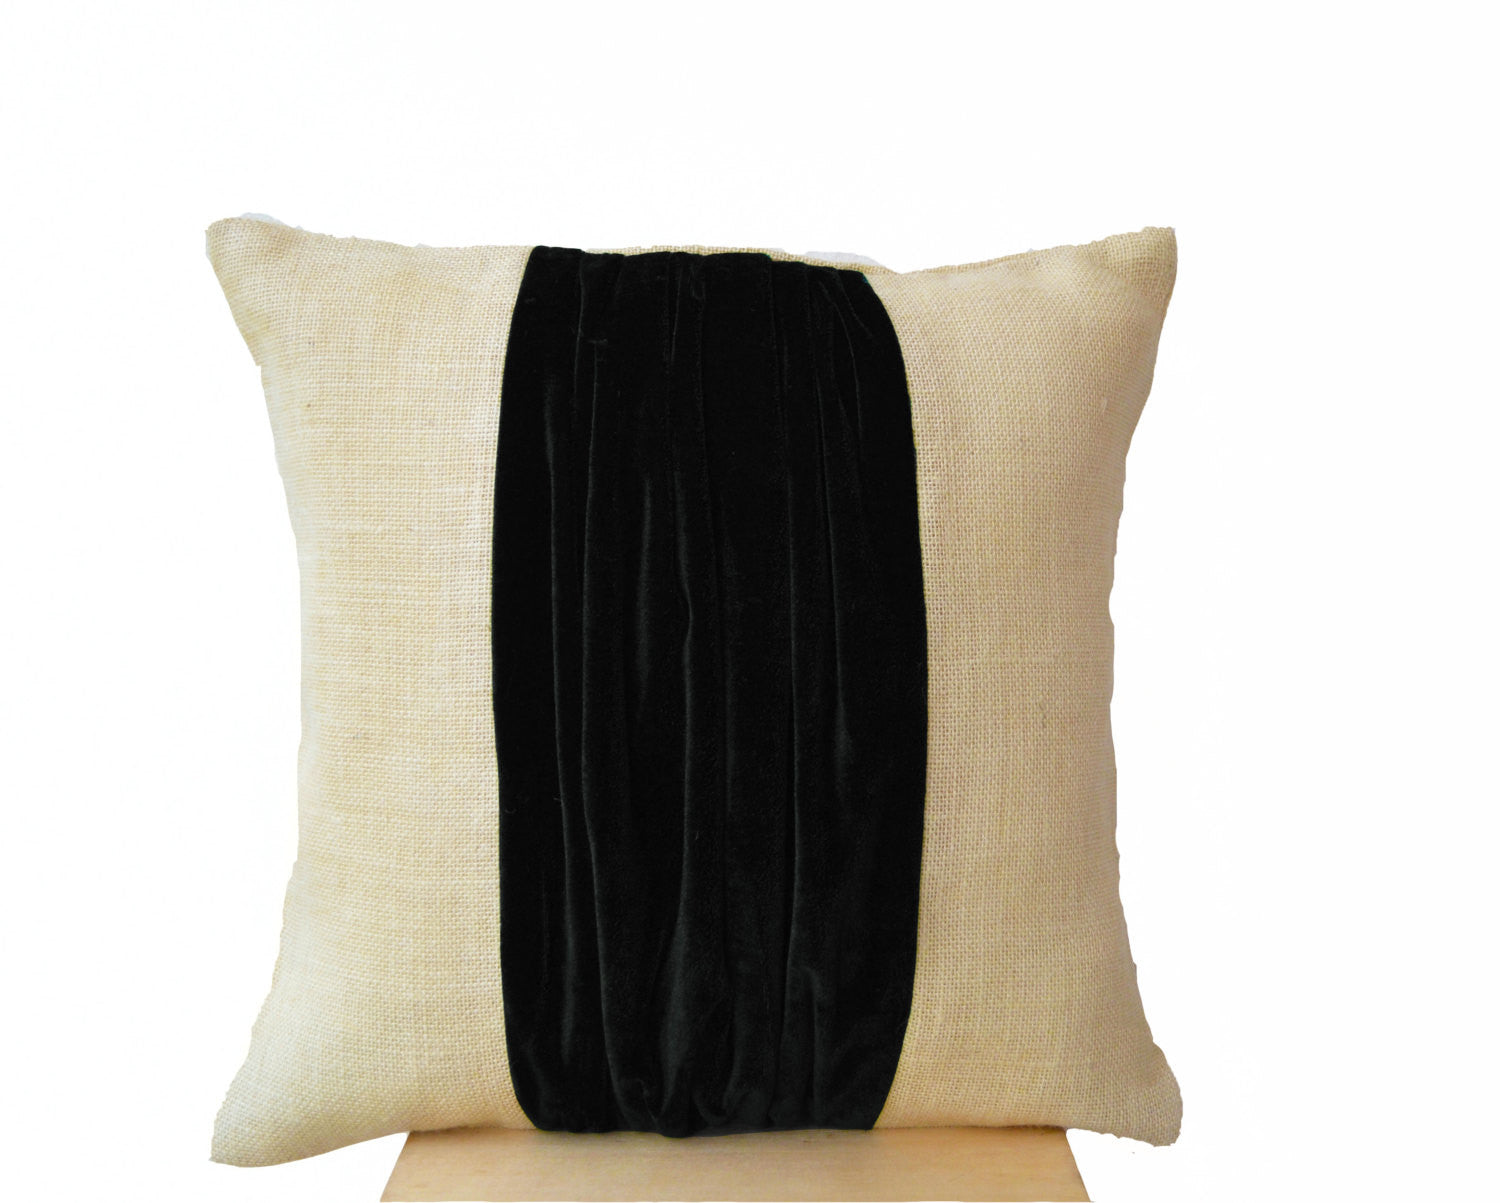 Handmade burlap velvet pillow with color block